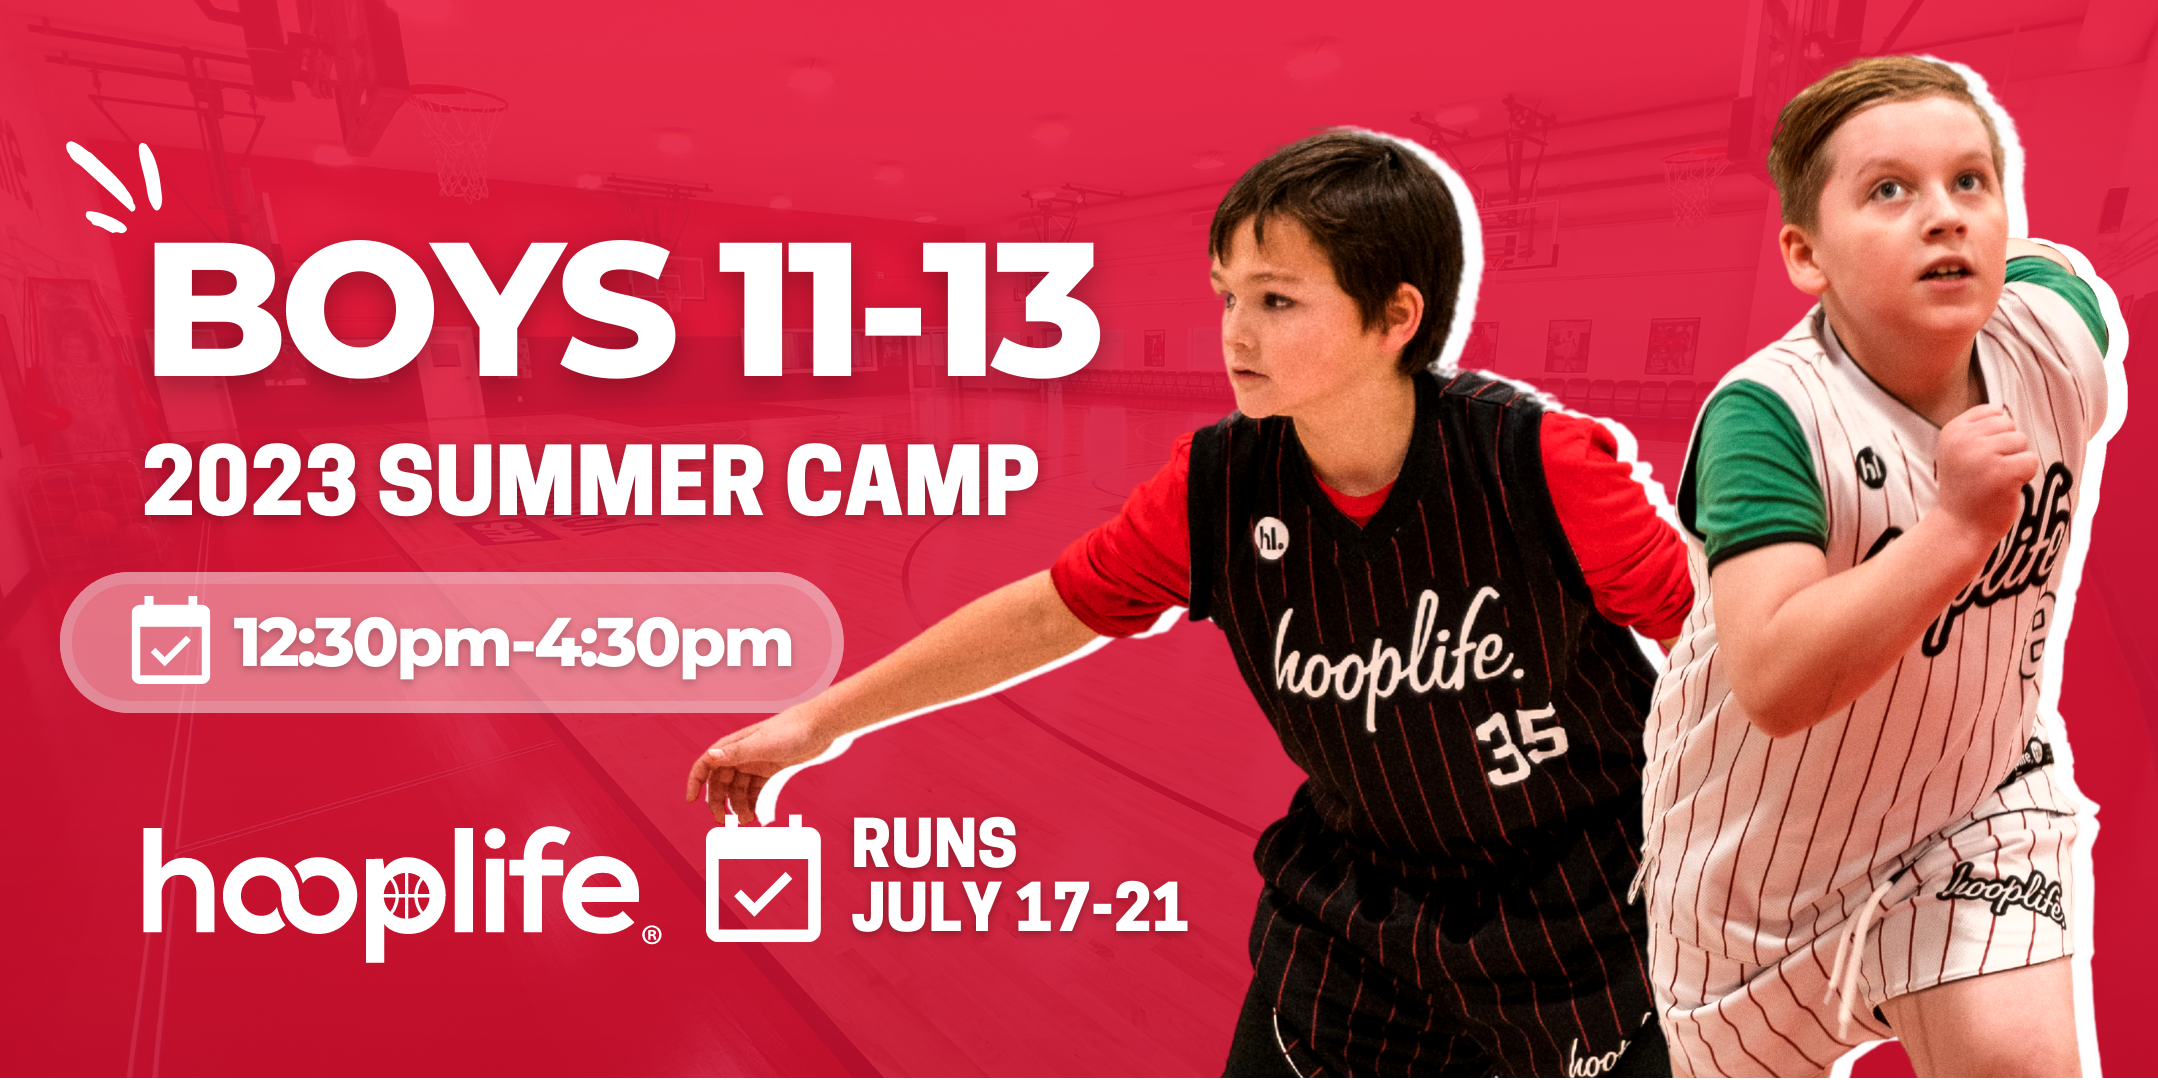 Boys 11-13 Summer Camp | July 17-21